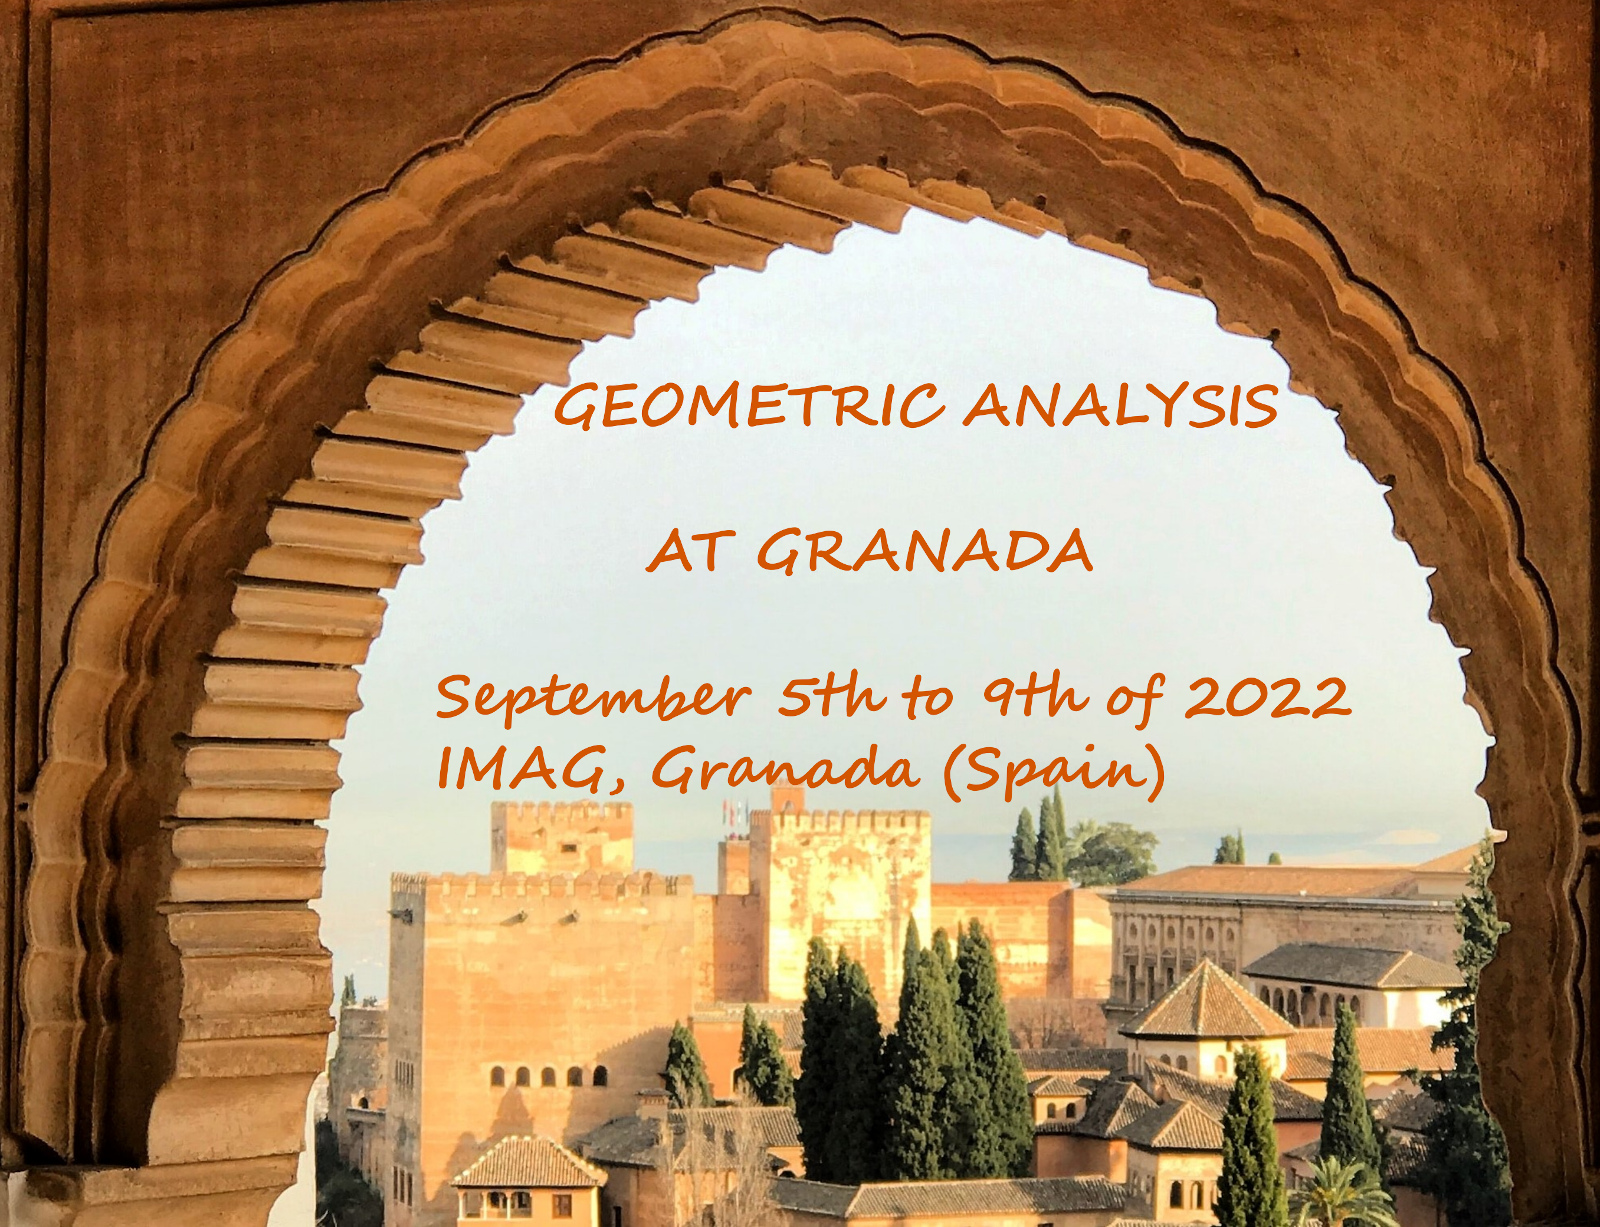 Congress: Geometric Analysis at Granada 